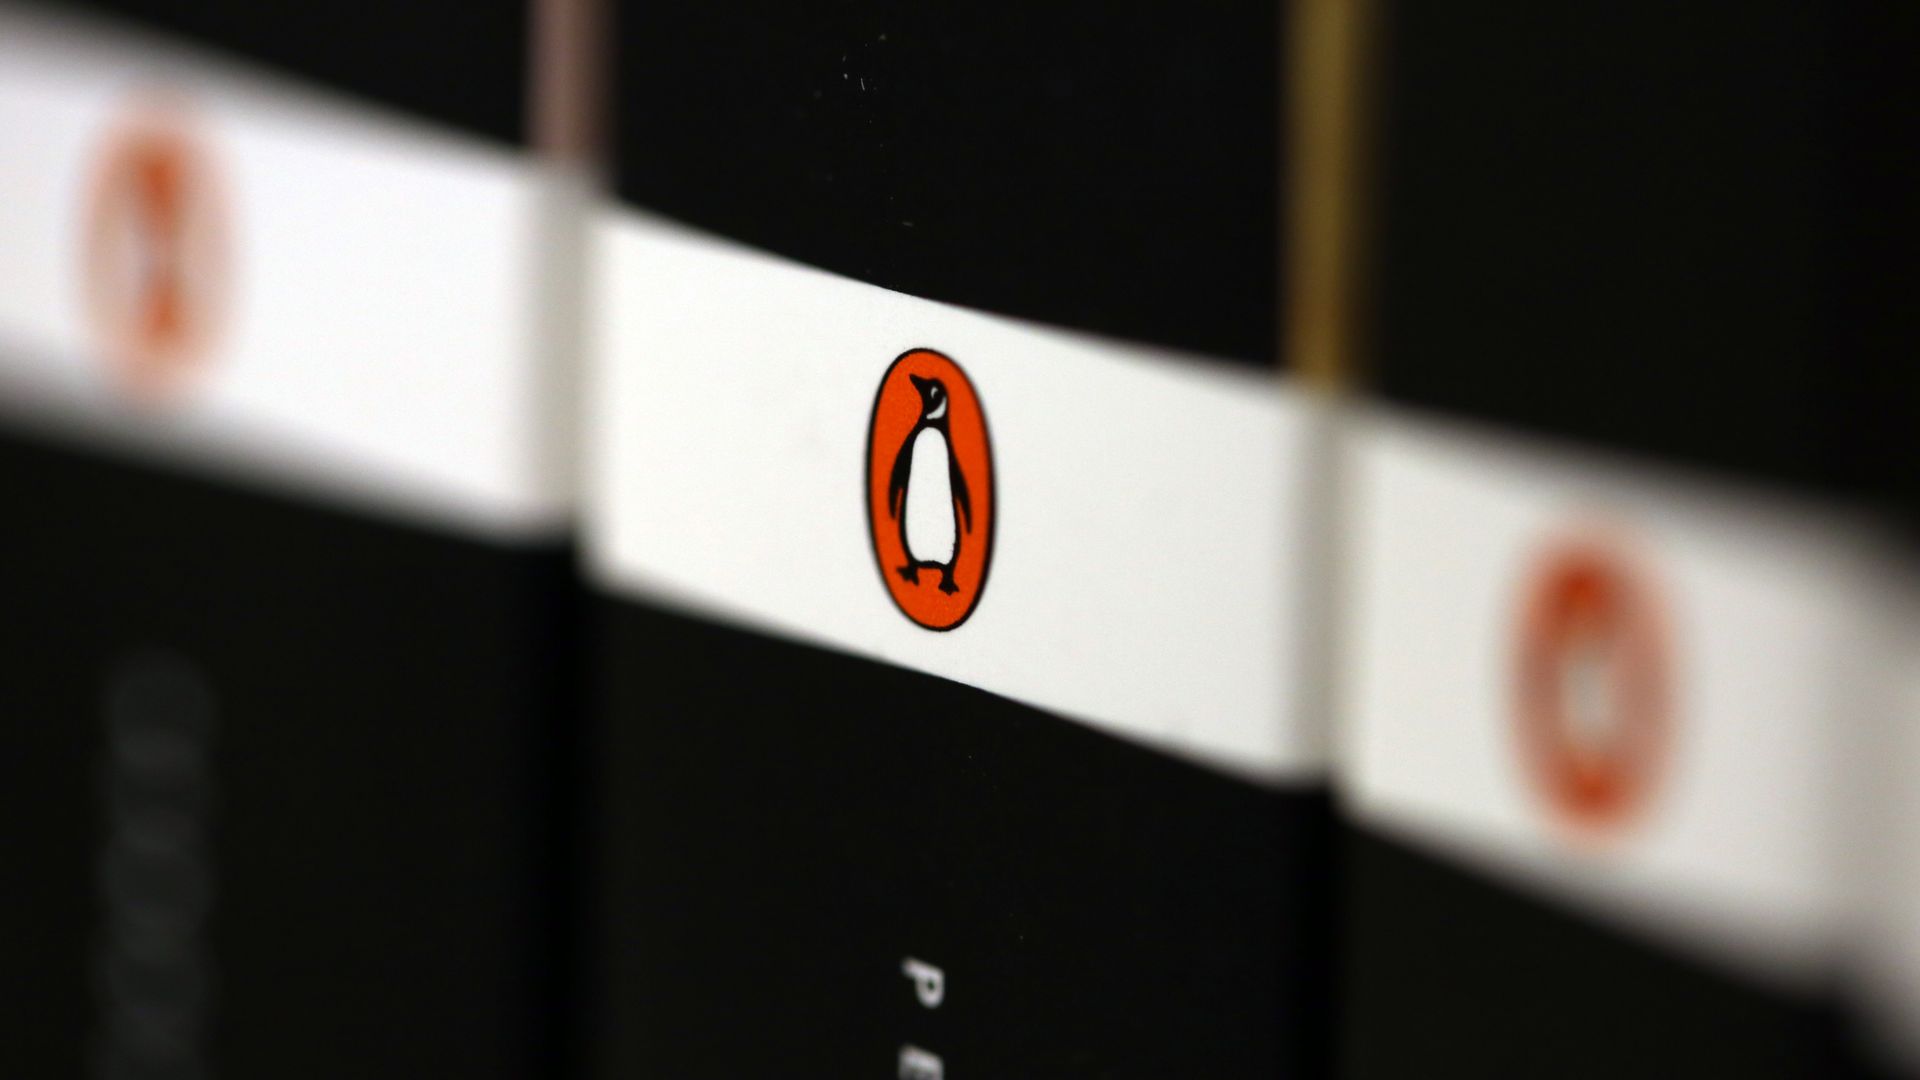 Penguin Random House’s logo on the spine of a book.